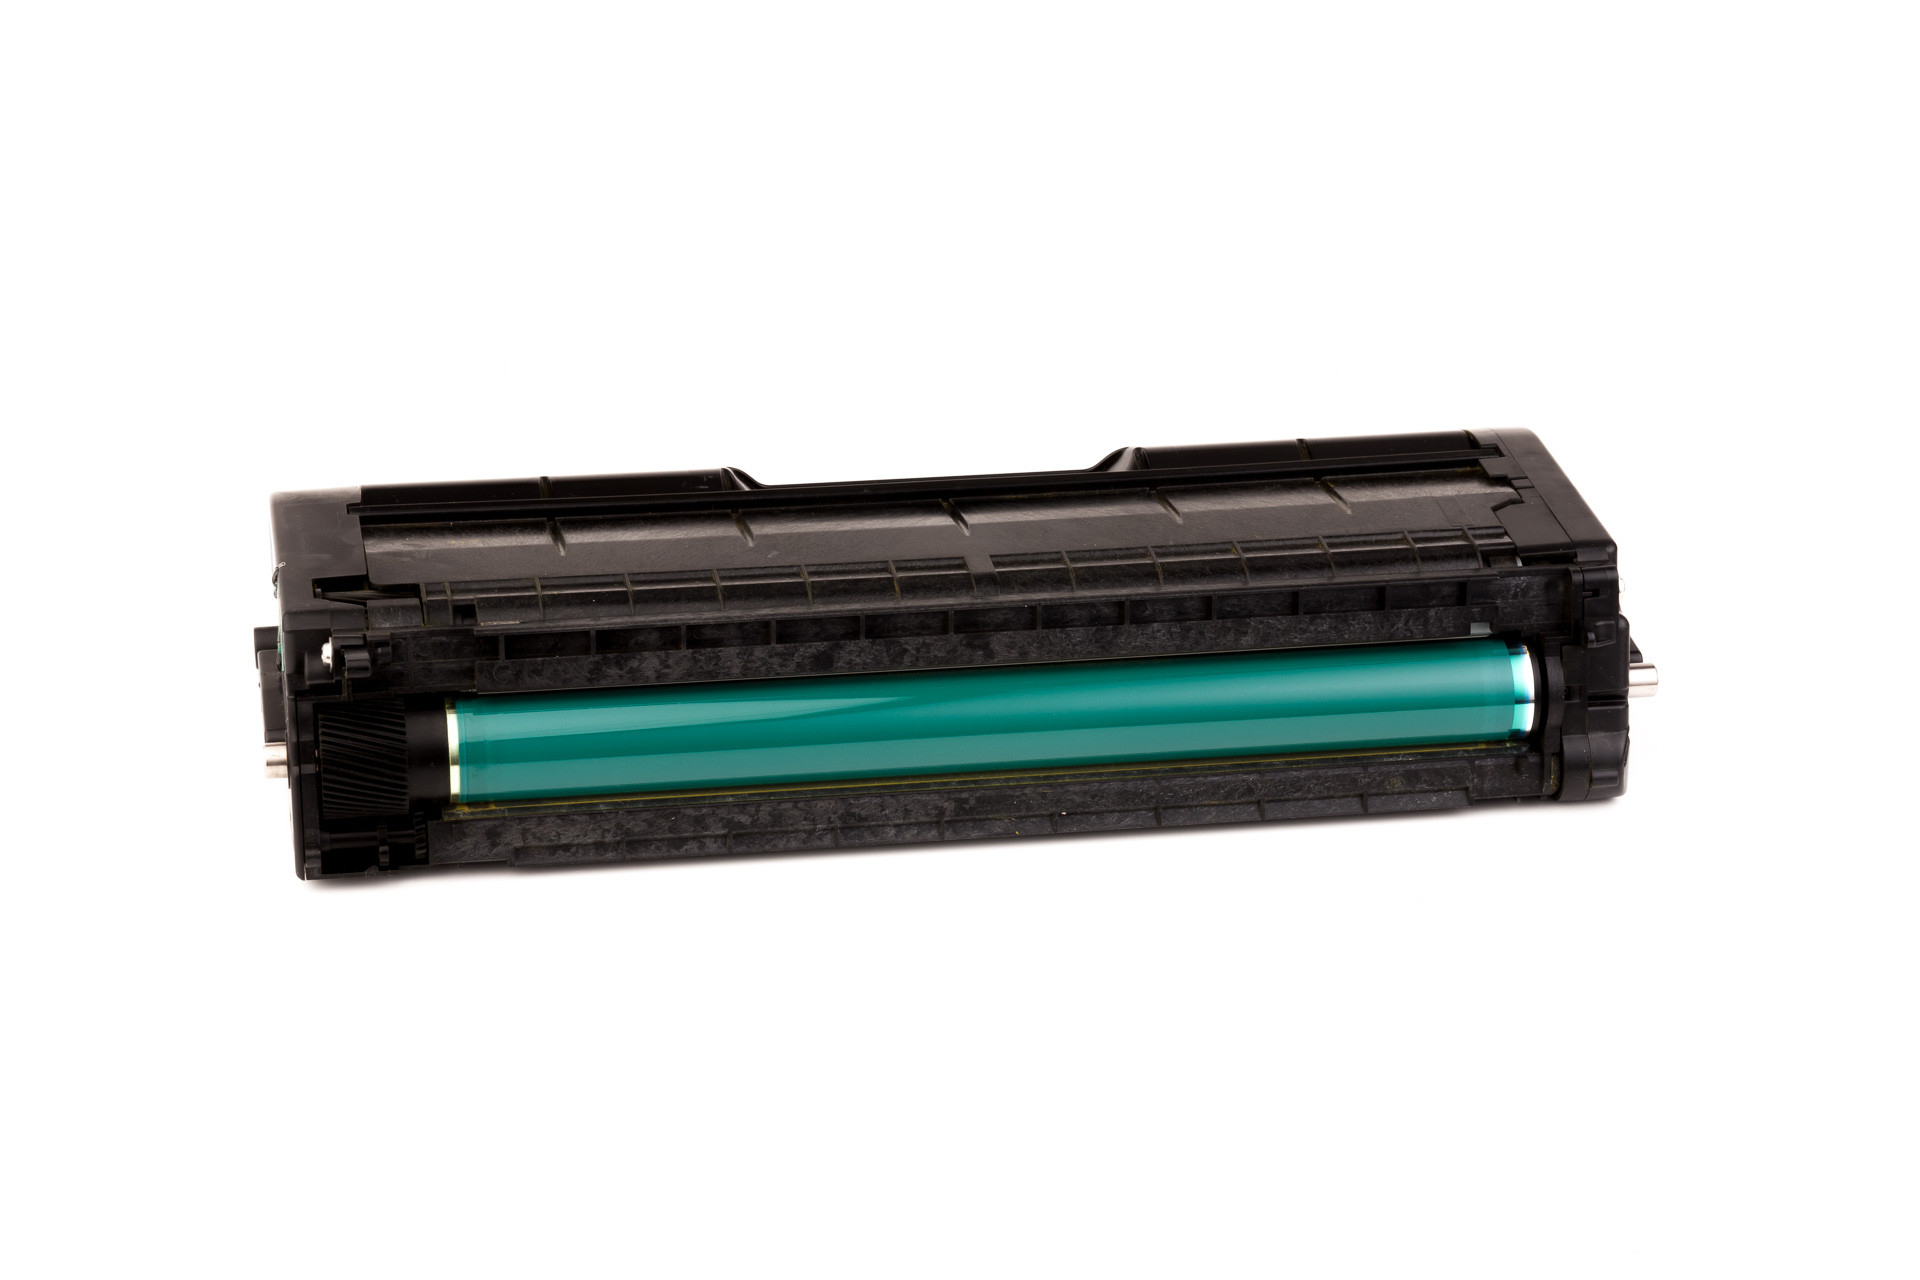 Set consisting of Toner cartridge (alternative) compatible with Ricoh Aficio SP C 220 N / Aficio SP C 220 S / Aficio SP C 221 SF / Aficio SP C 222 DN / Aficio SP C 222 SF black, cyan, magenta, yellow - Save 6%